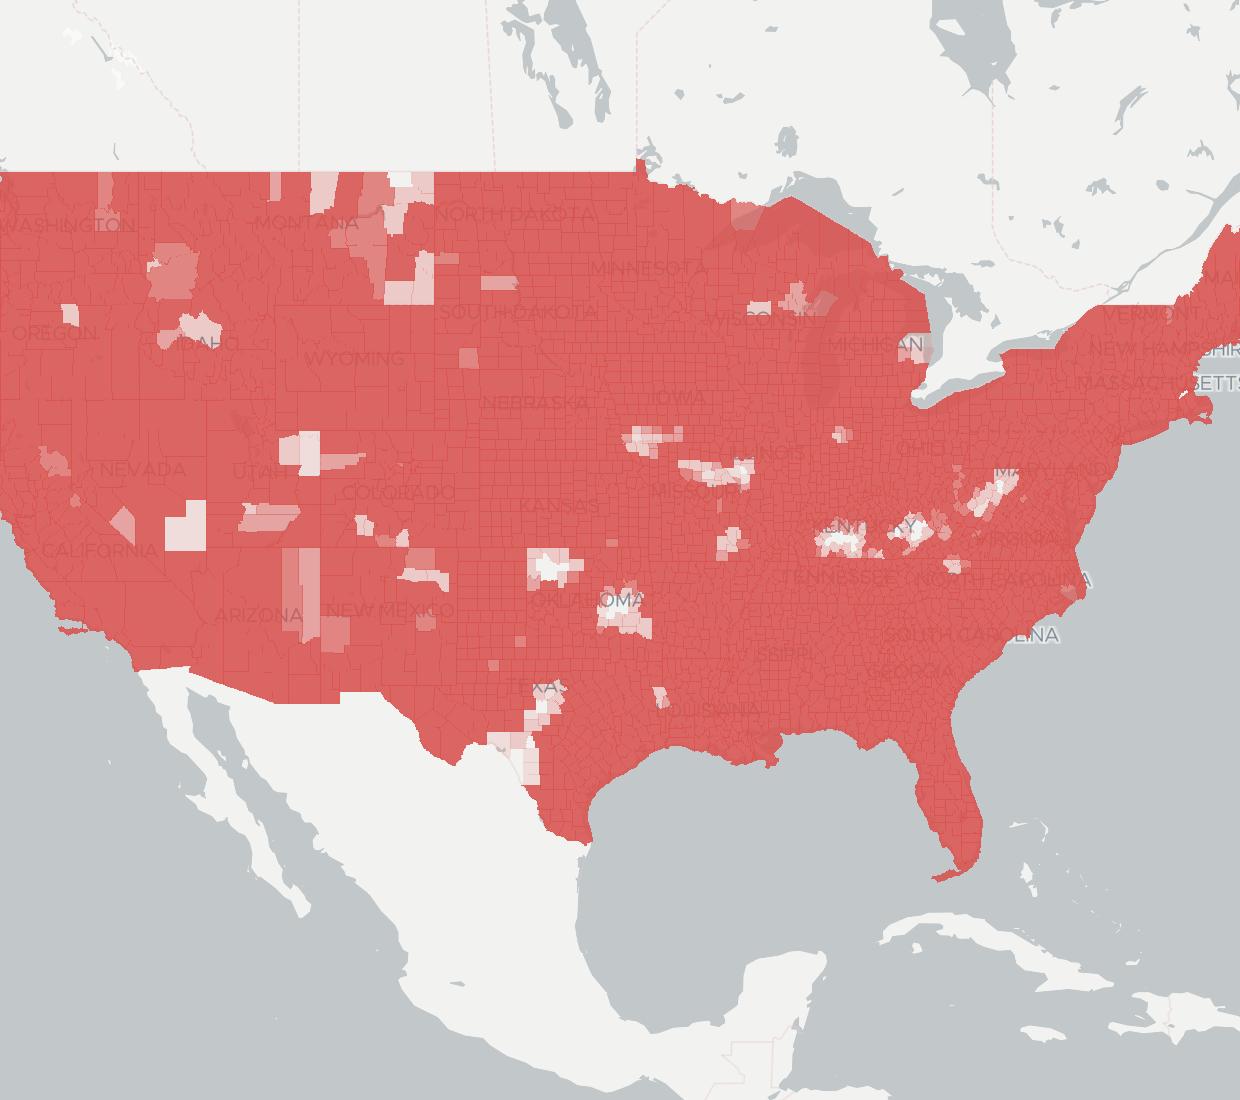 Verizon Coverage Map